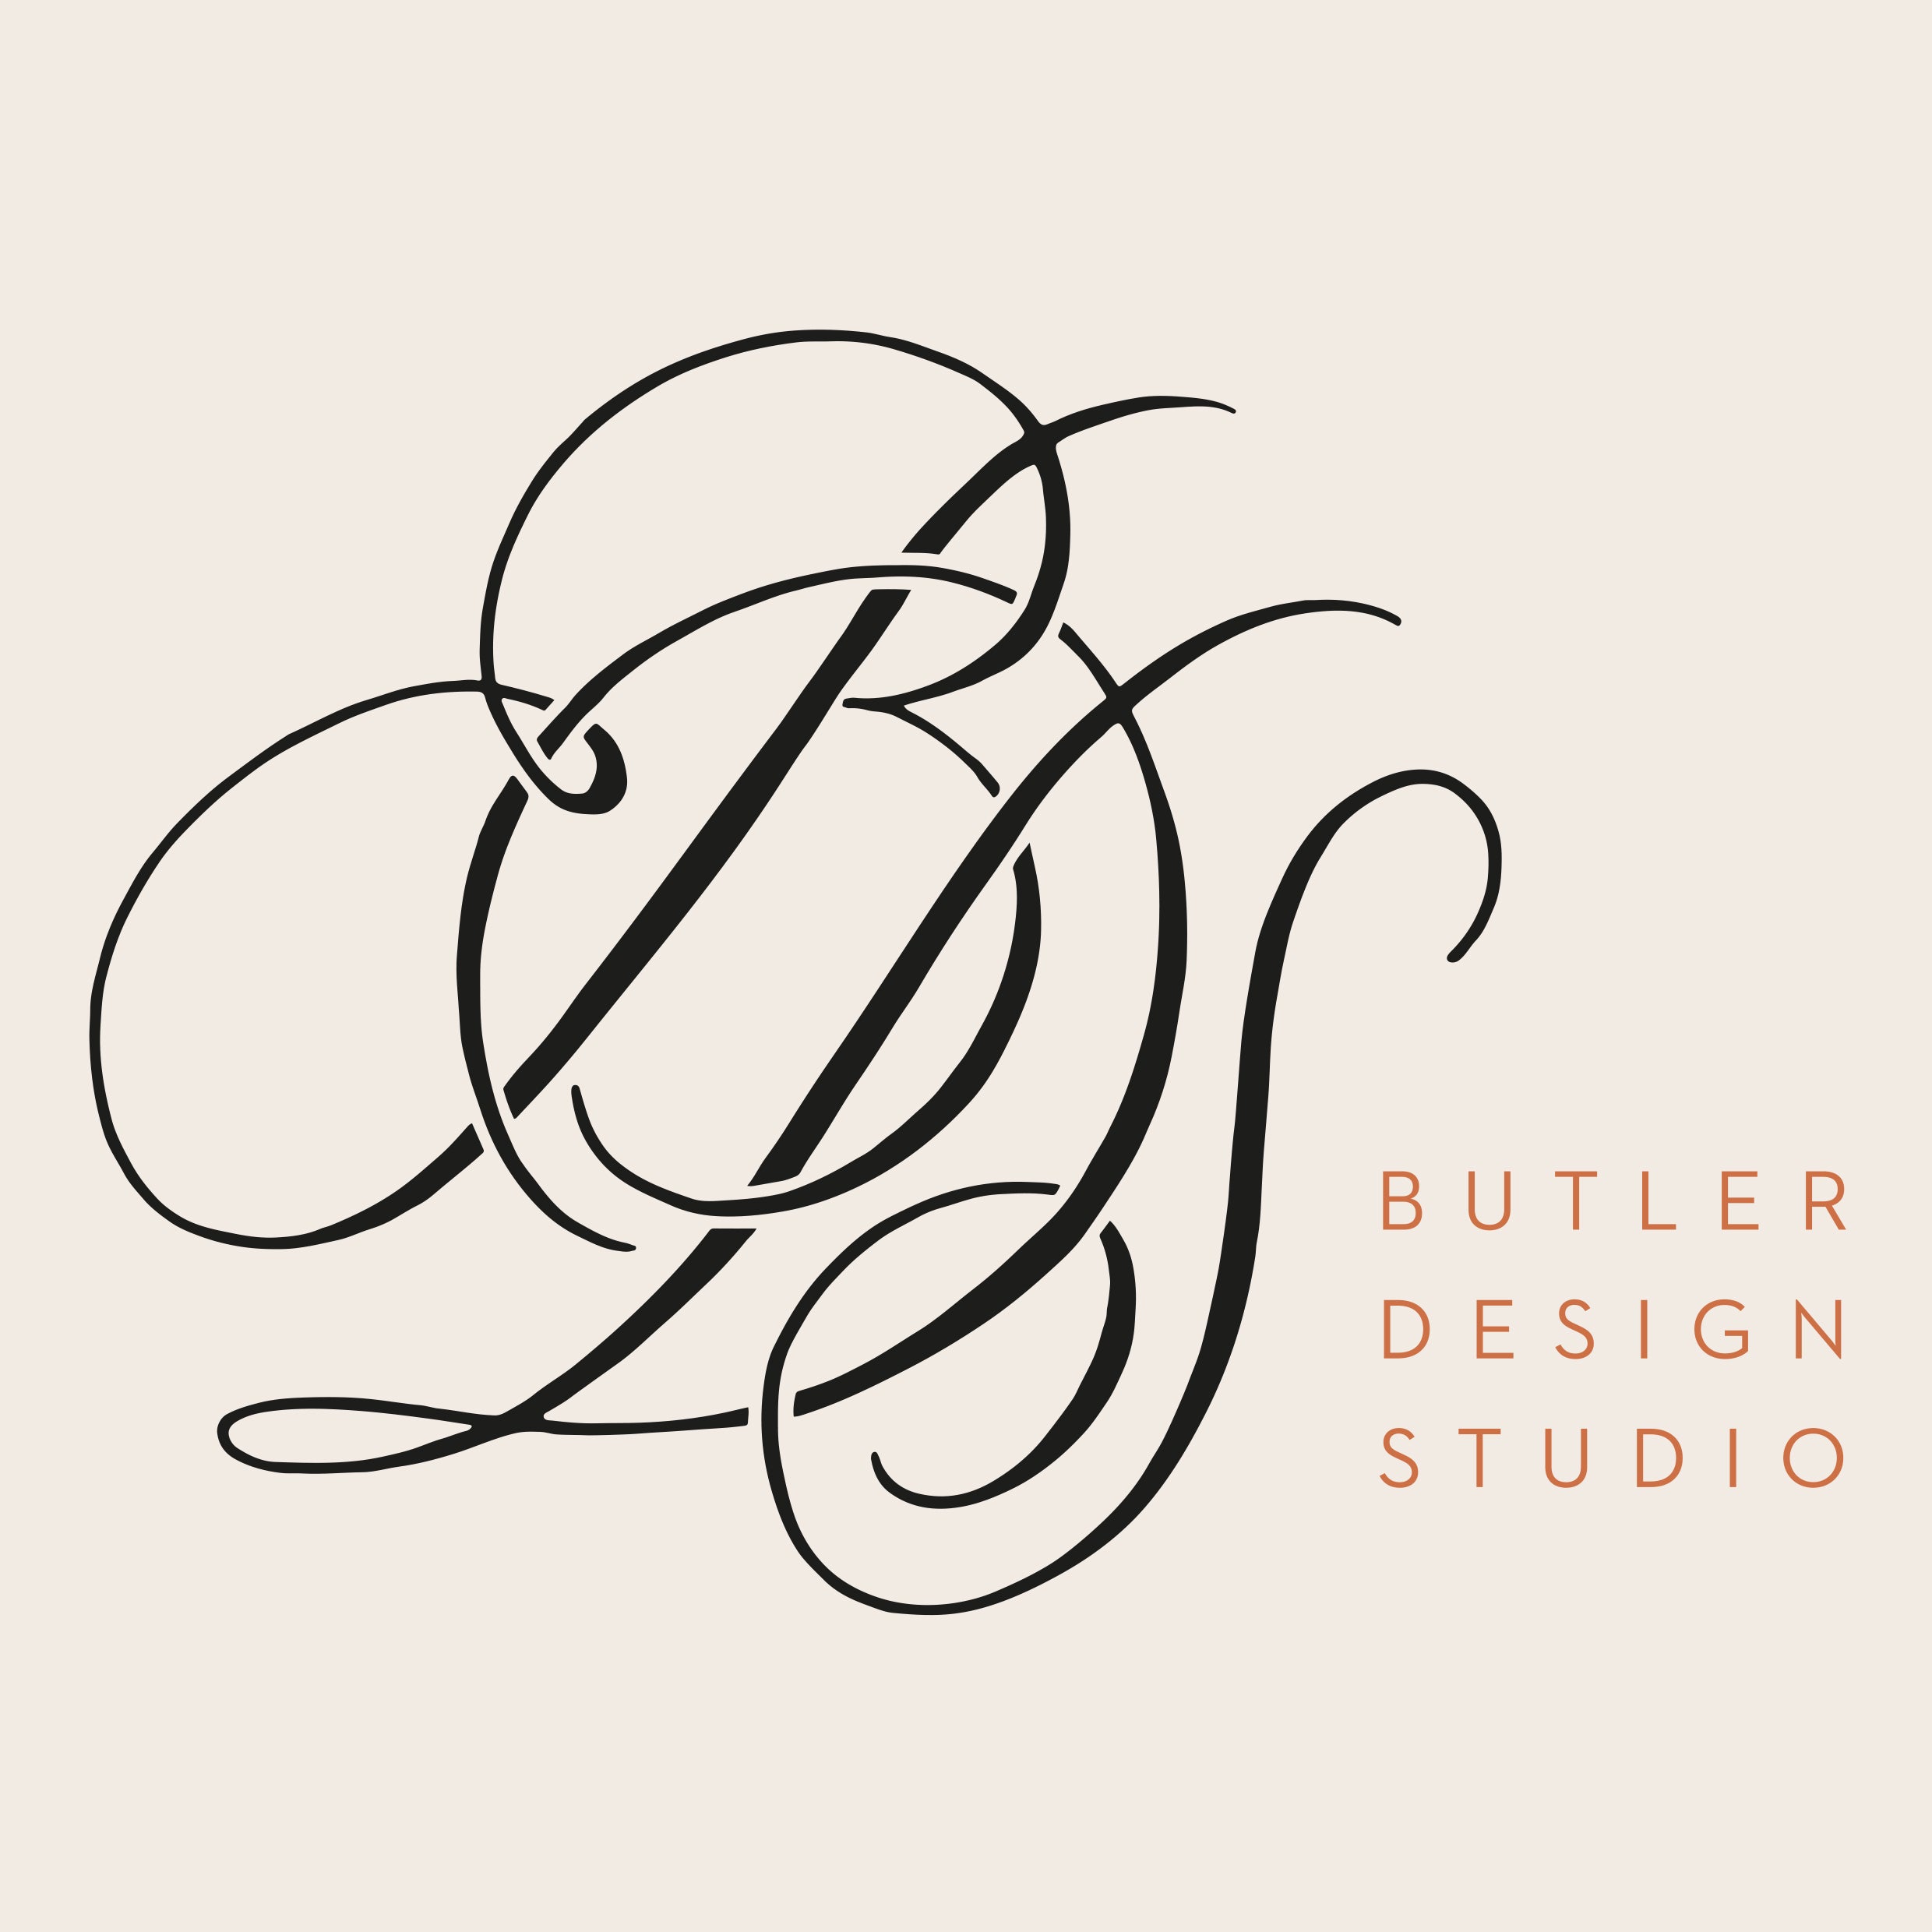 Butler Design Studio logo with clean BDS monogram and copper sans serif lettering